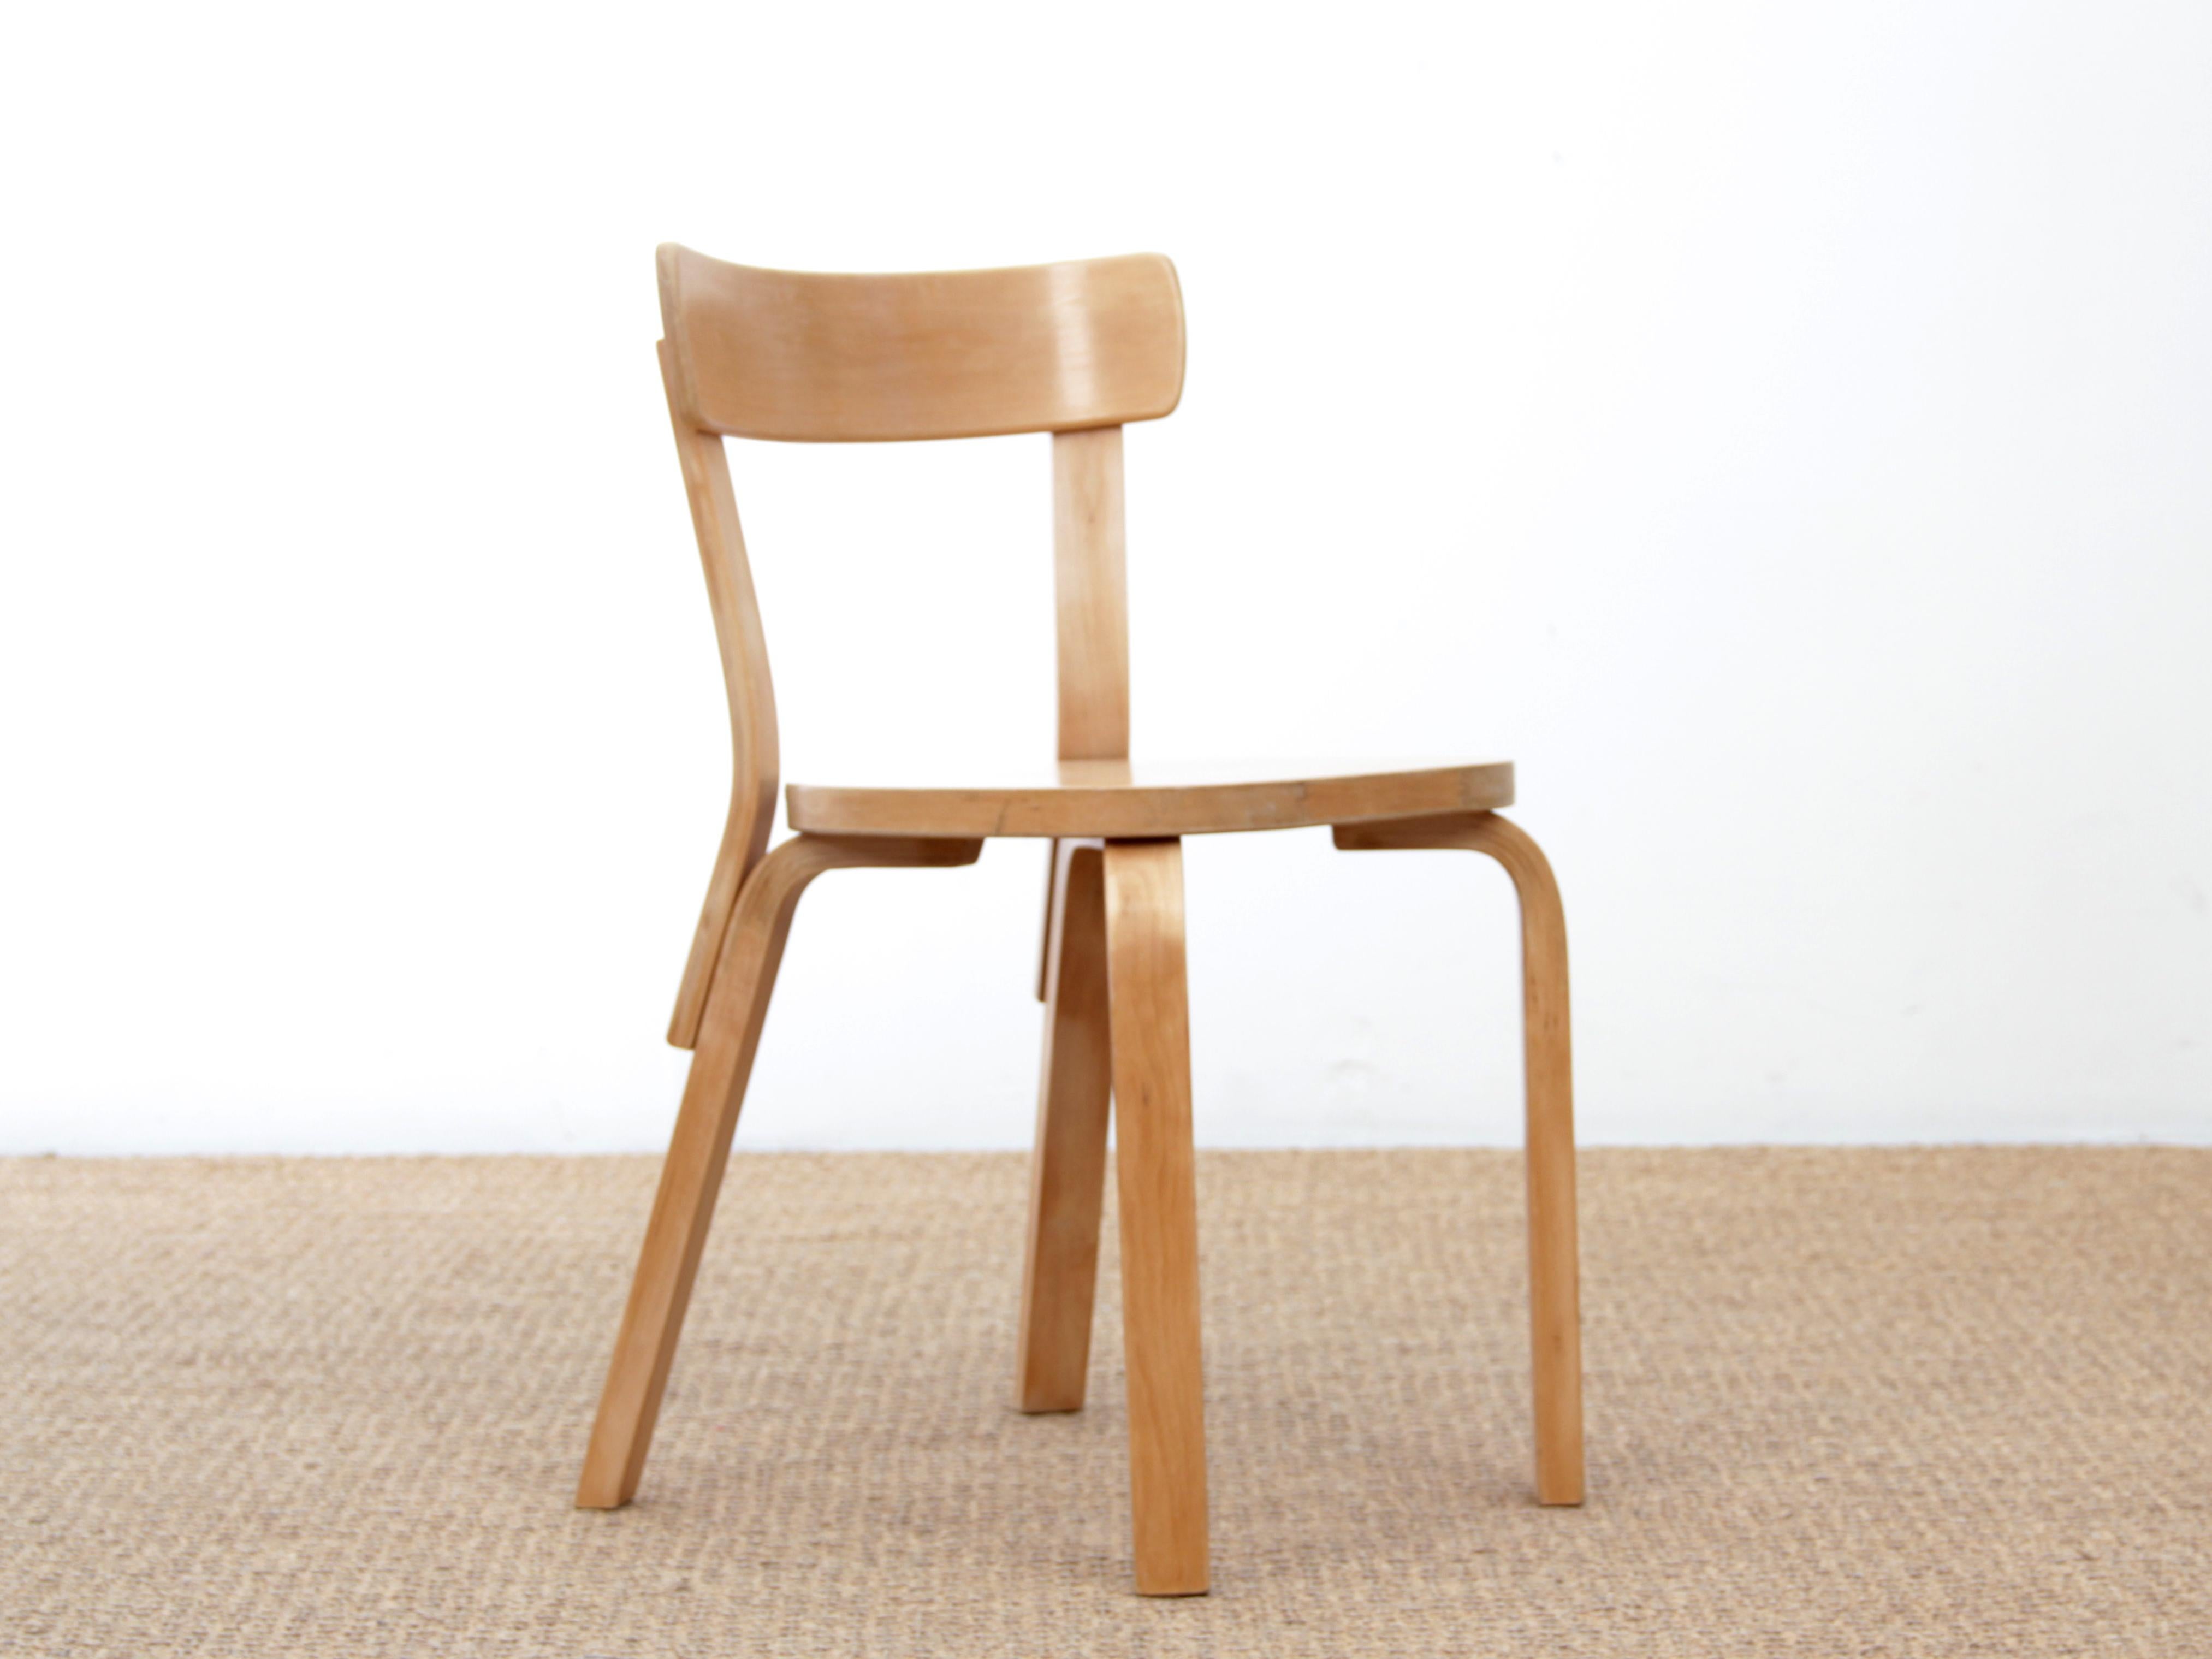 Scandinavian Modern Mid-Century Modern Scandinavian Pair of Chairs Model 69 by Alvar Aalto For Sale